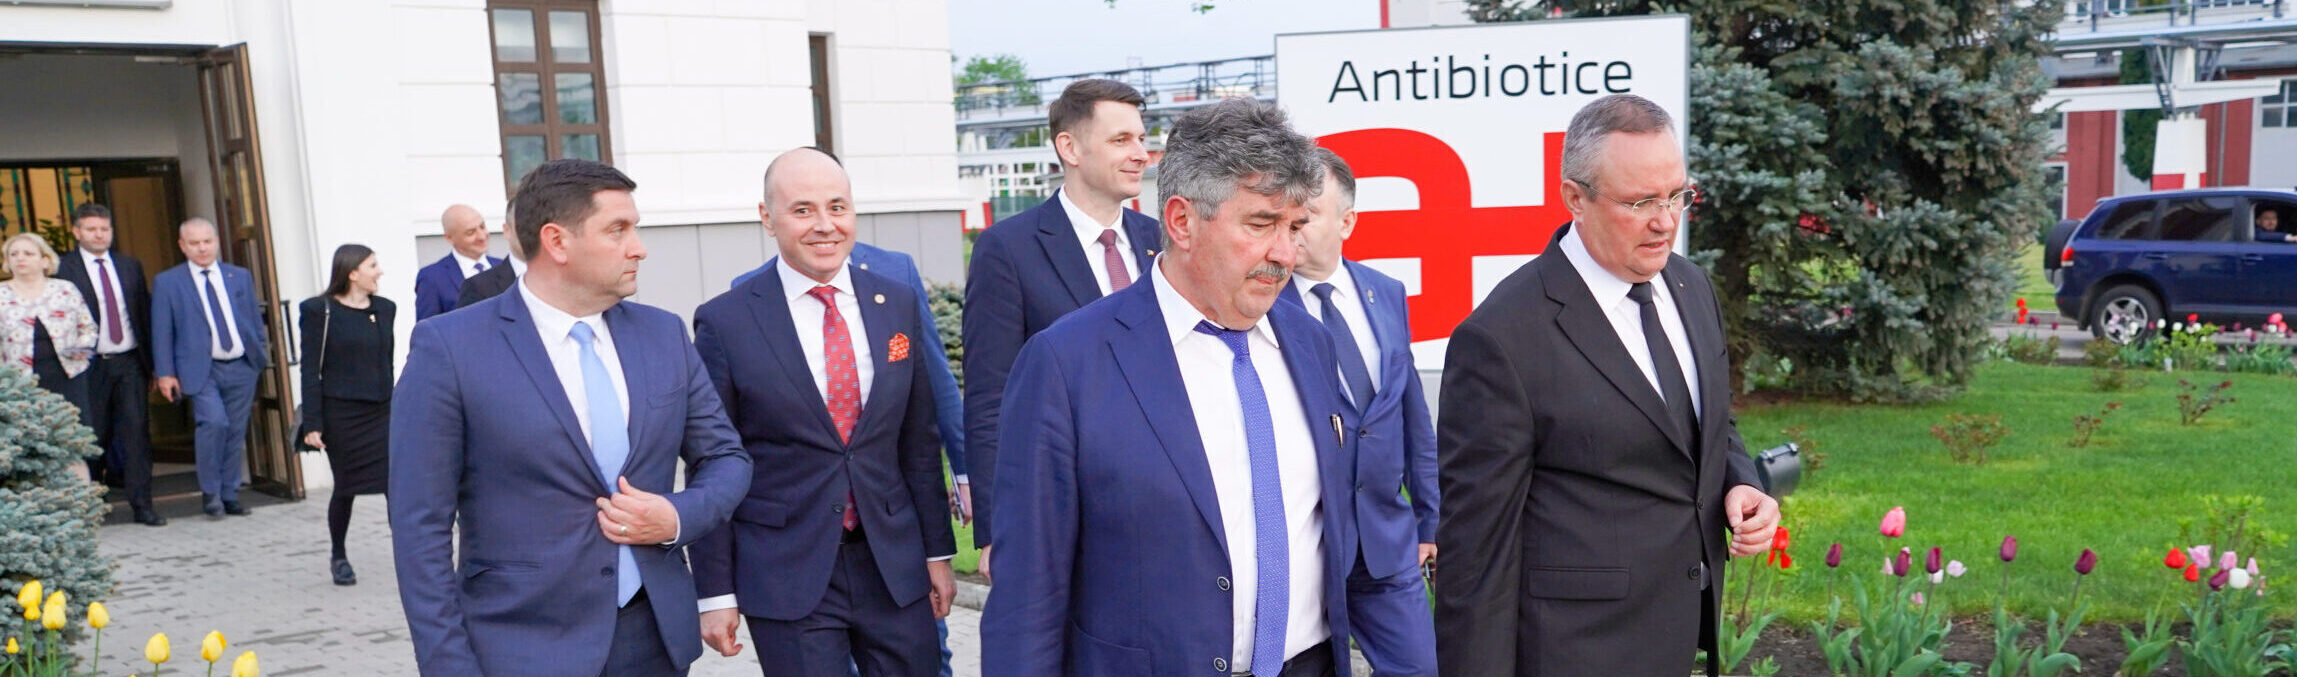 Vizita premierului României la Antibiotice Iași